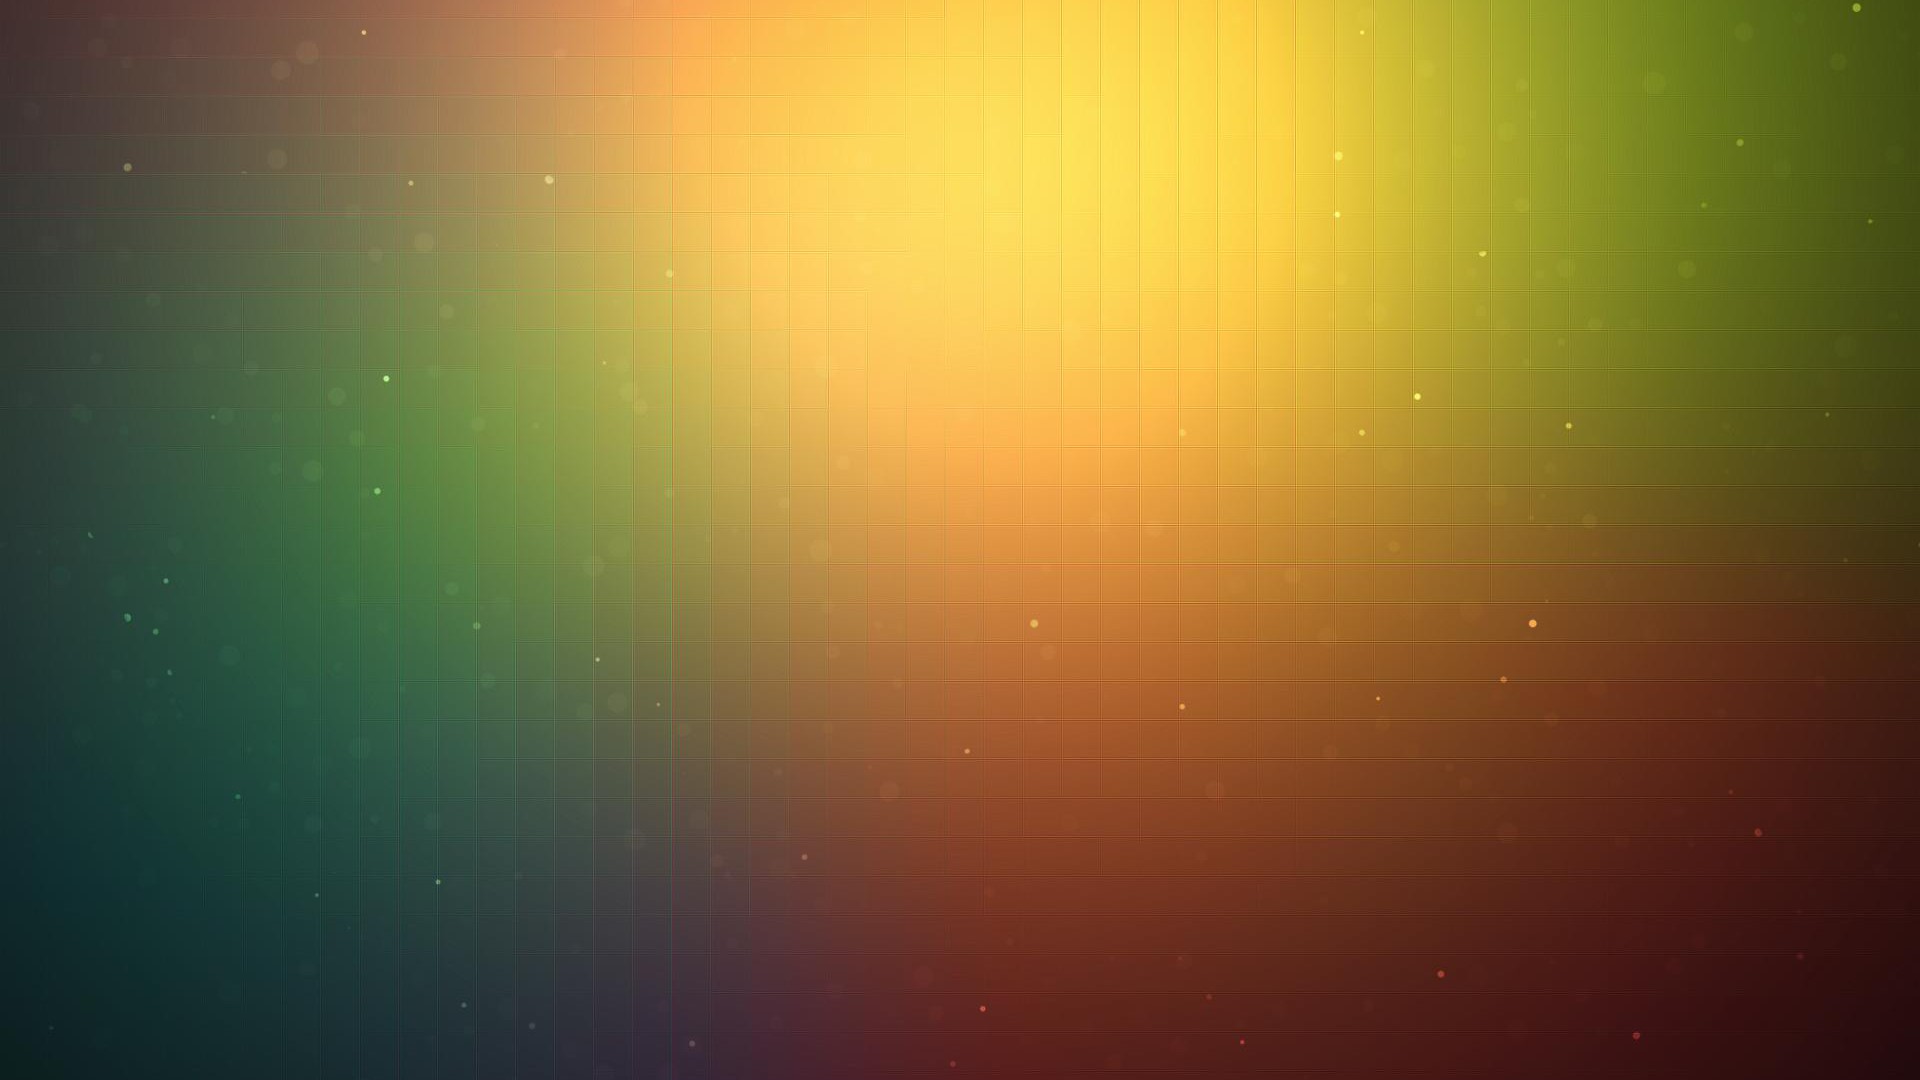 Simple Backgrounds free download | PixelsTalk Net